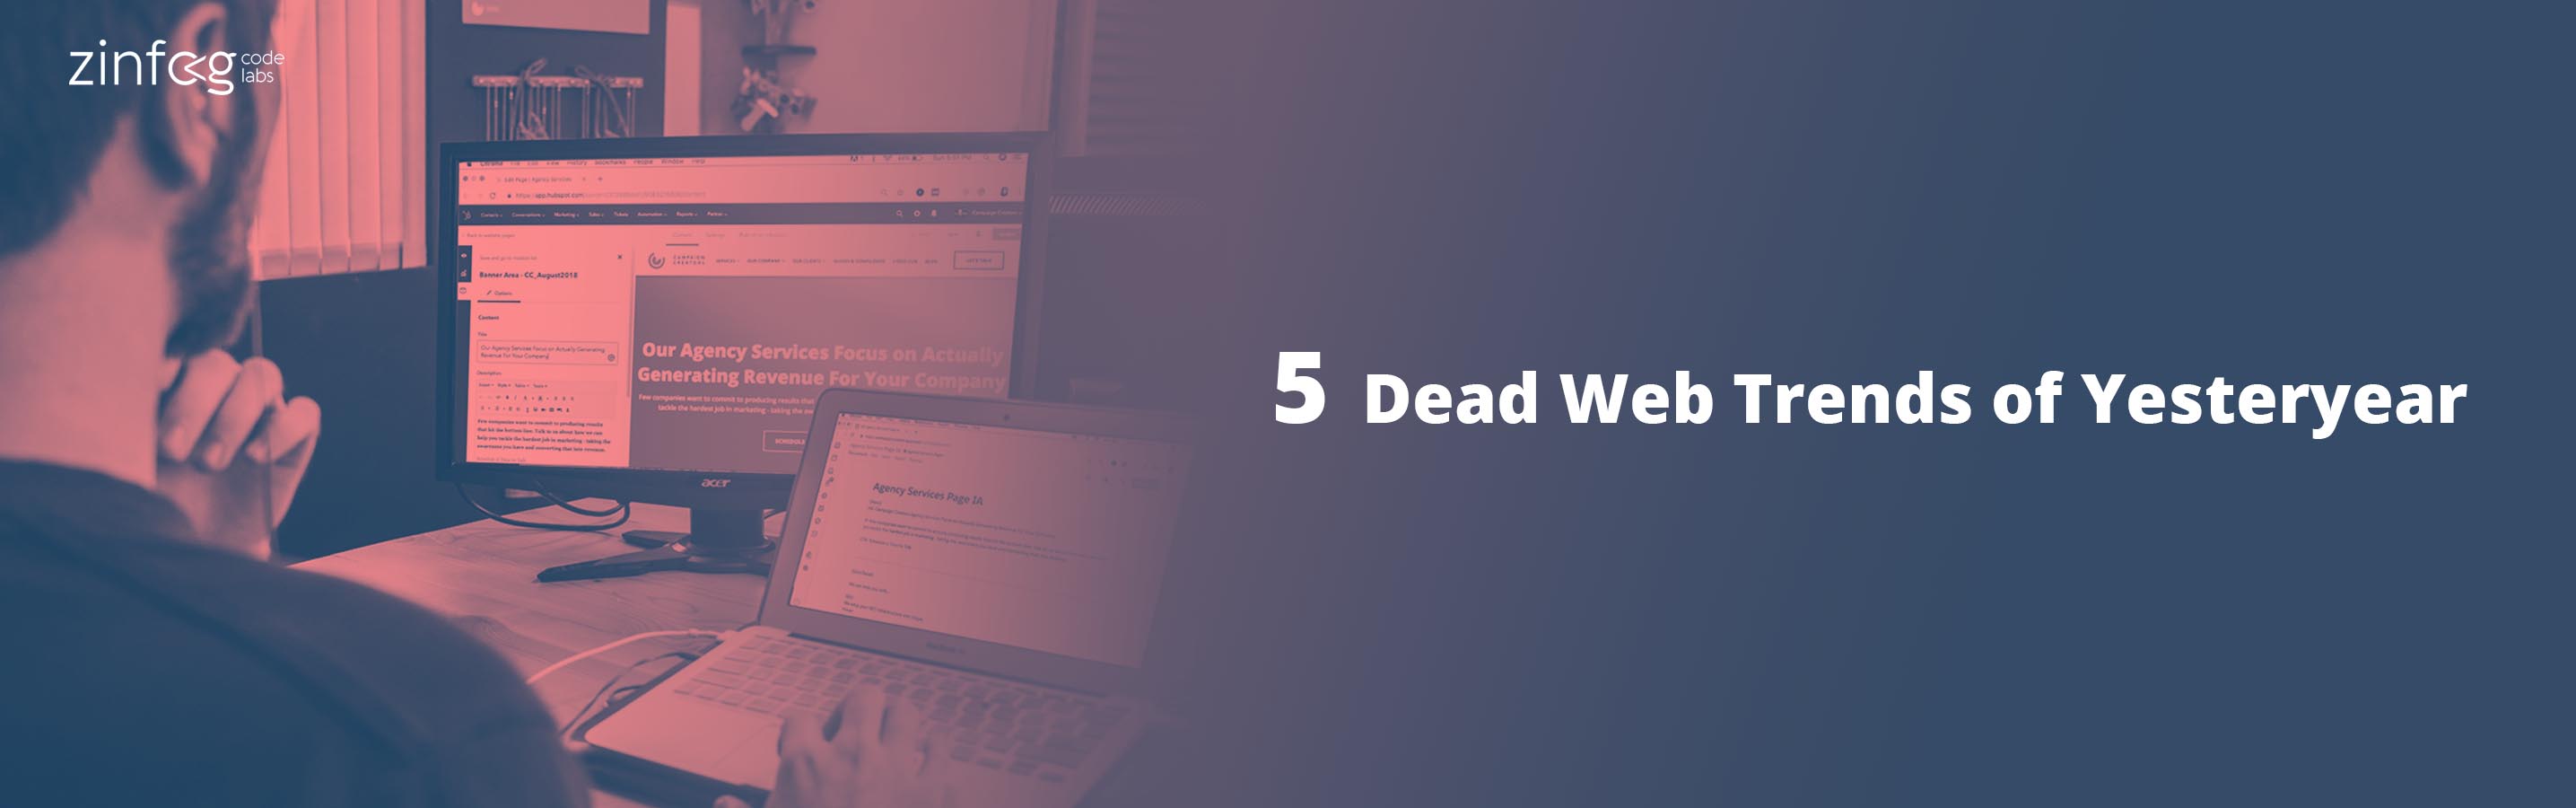 5_dead_web_trends_of_yesteryear.html